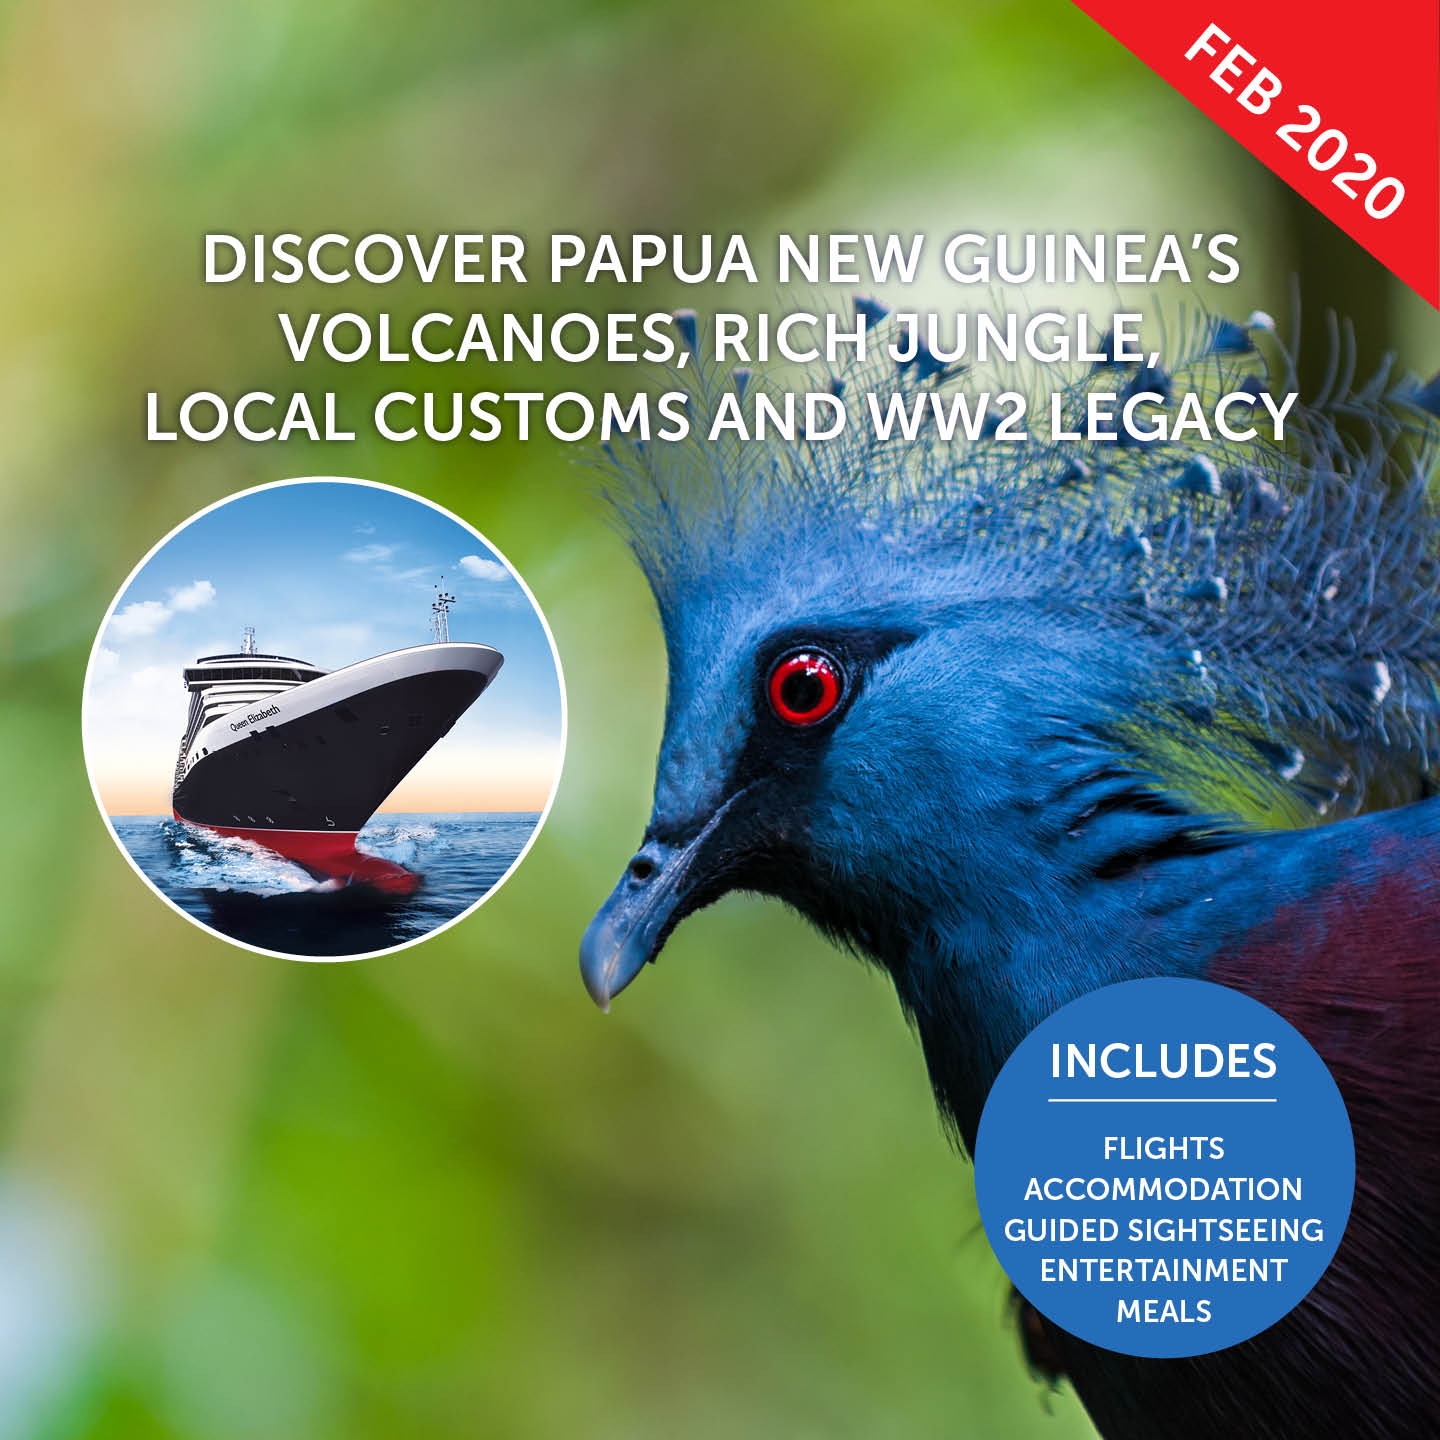 papua-new-guinea-feb-2020-1-thumb.jpg